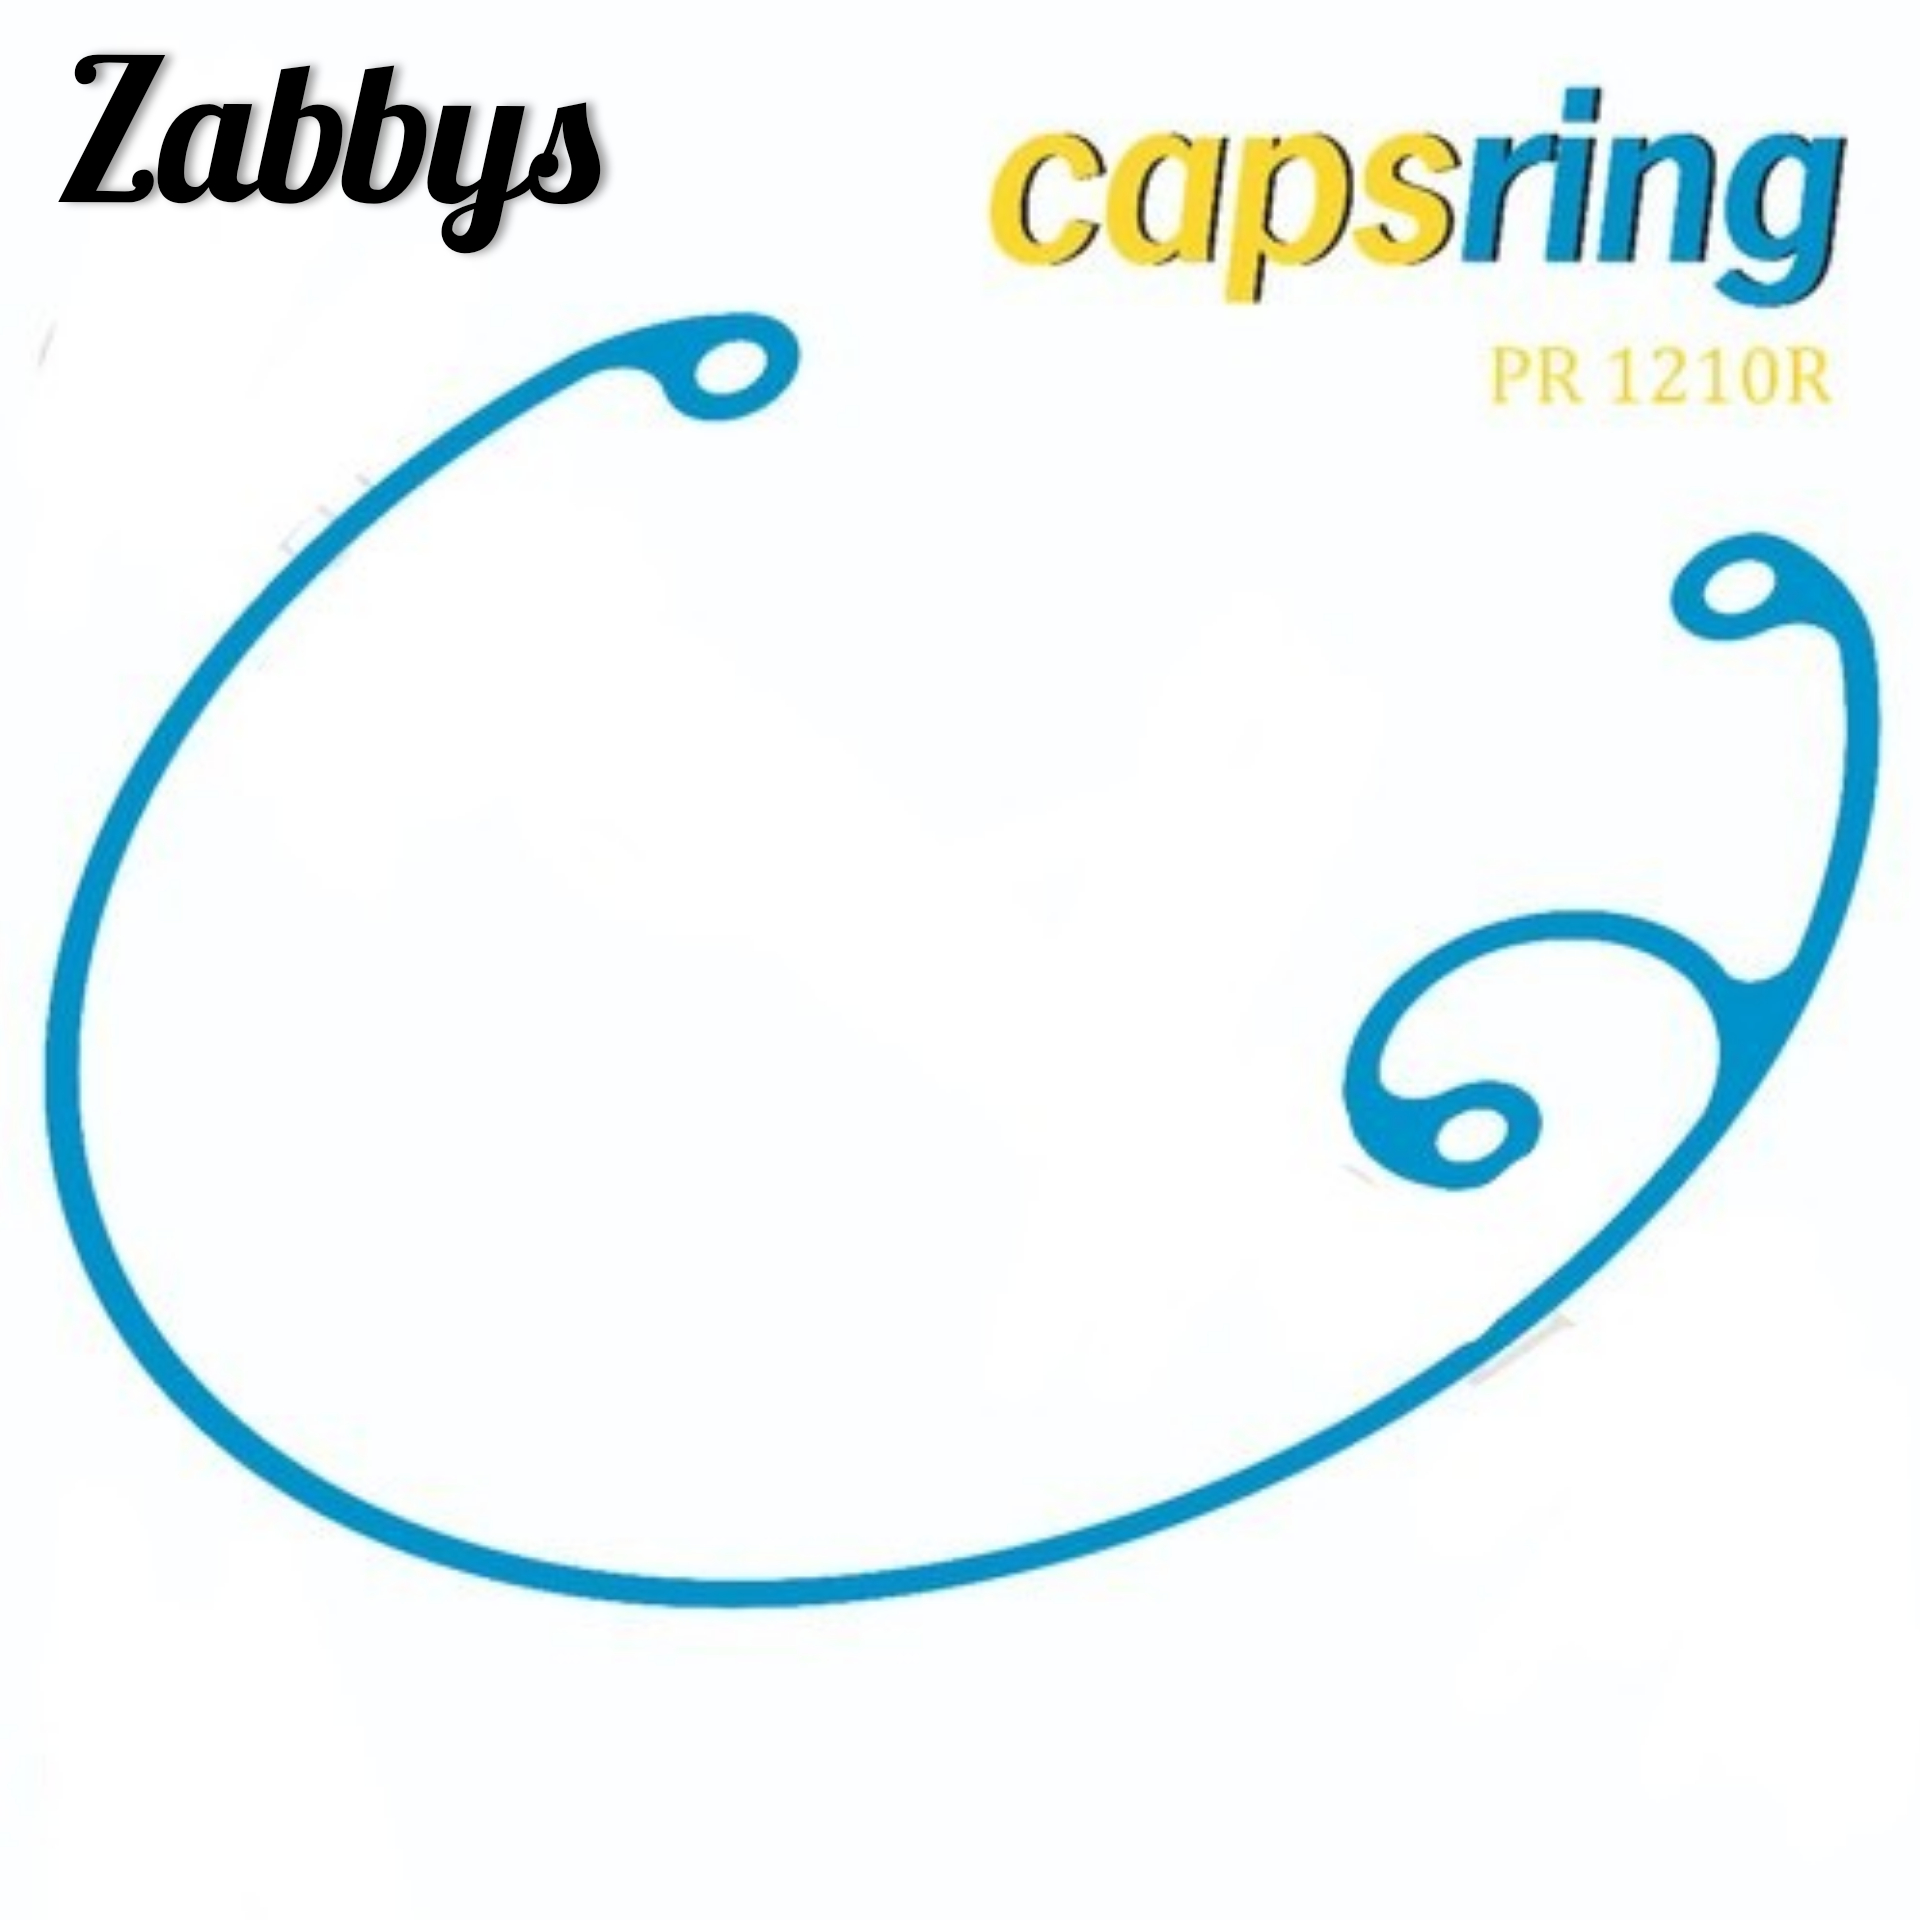 Zabbys Capsring